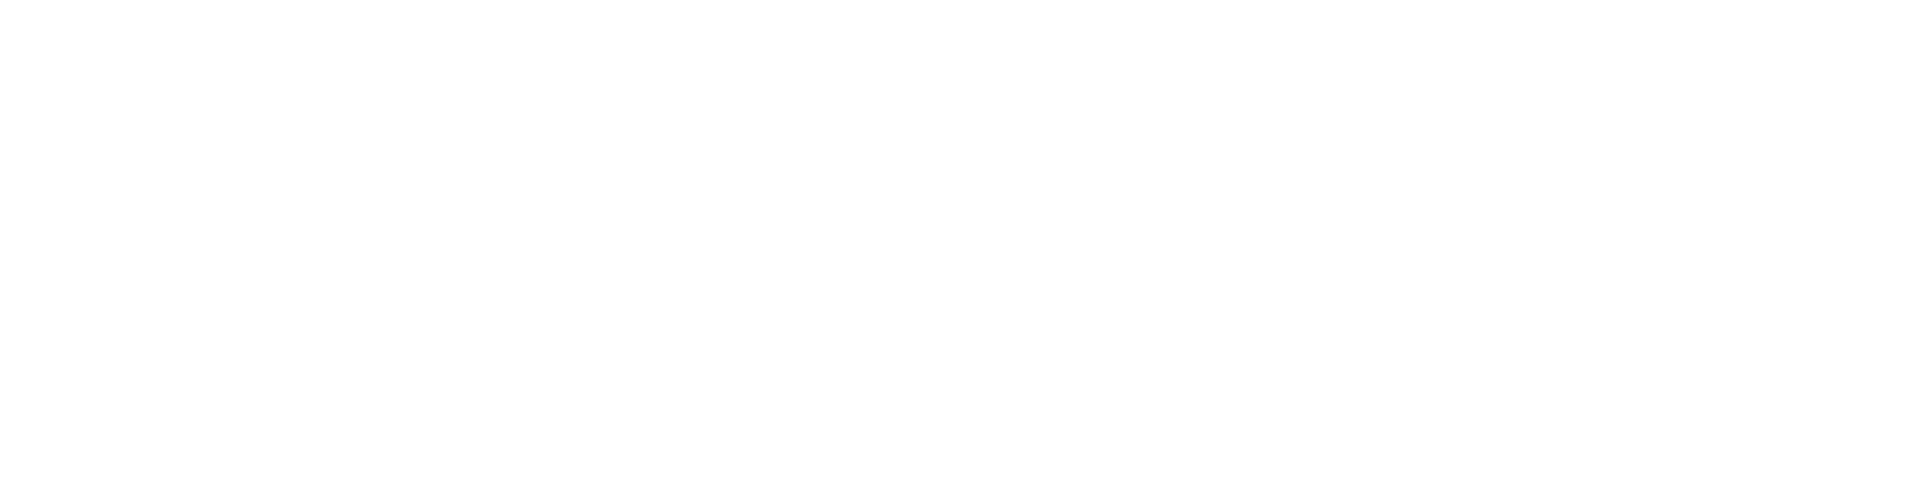 Hackett_Medium_Logo_White.png